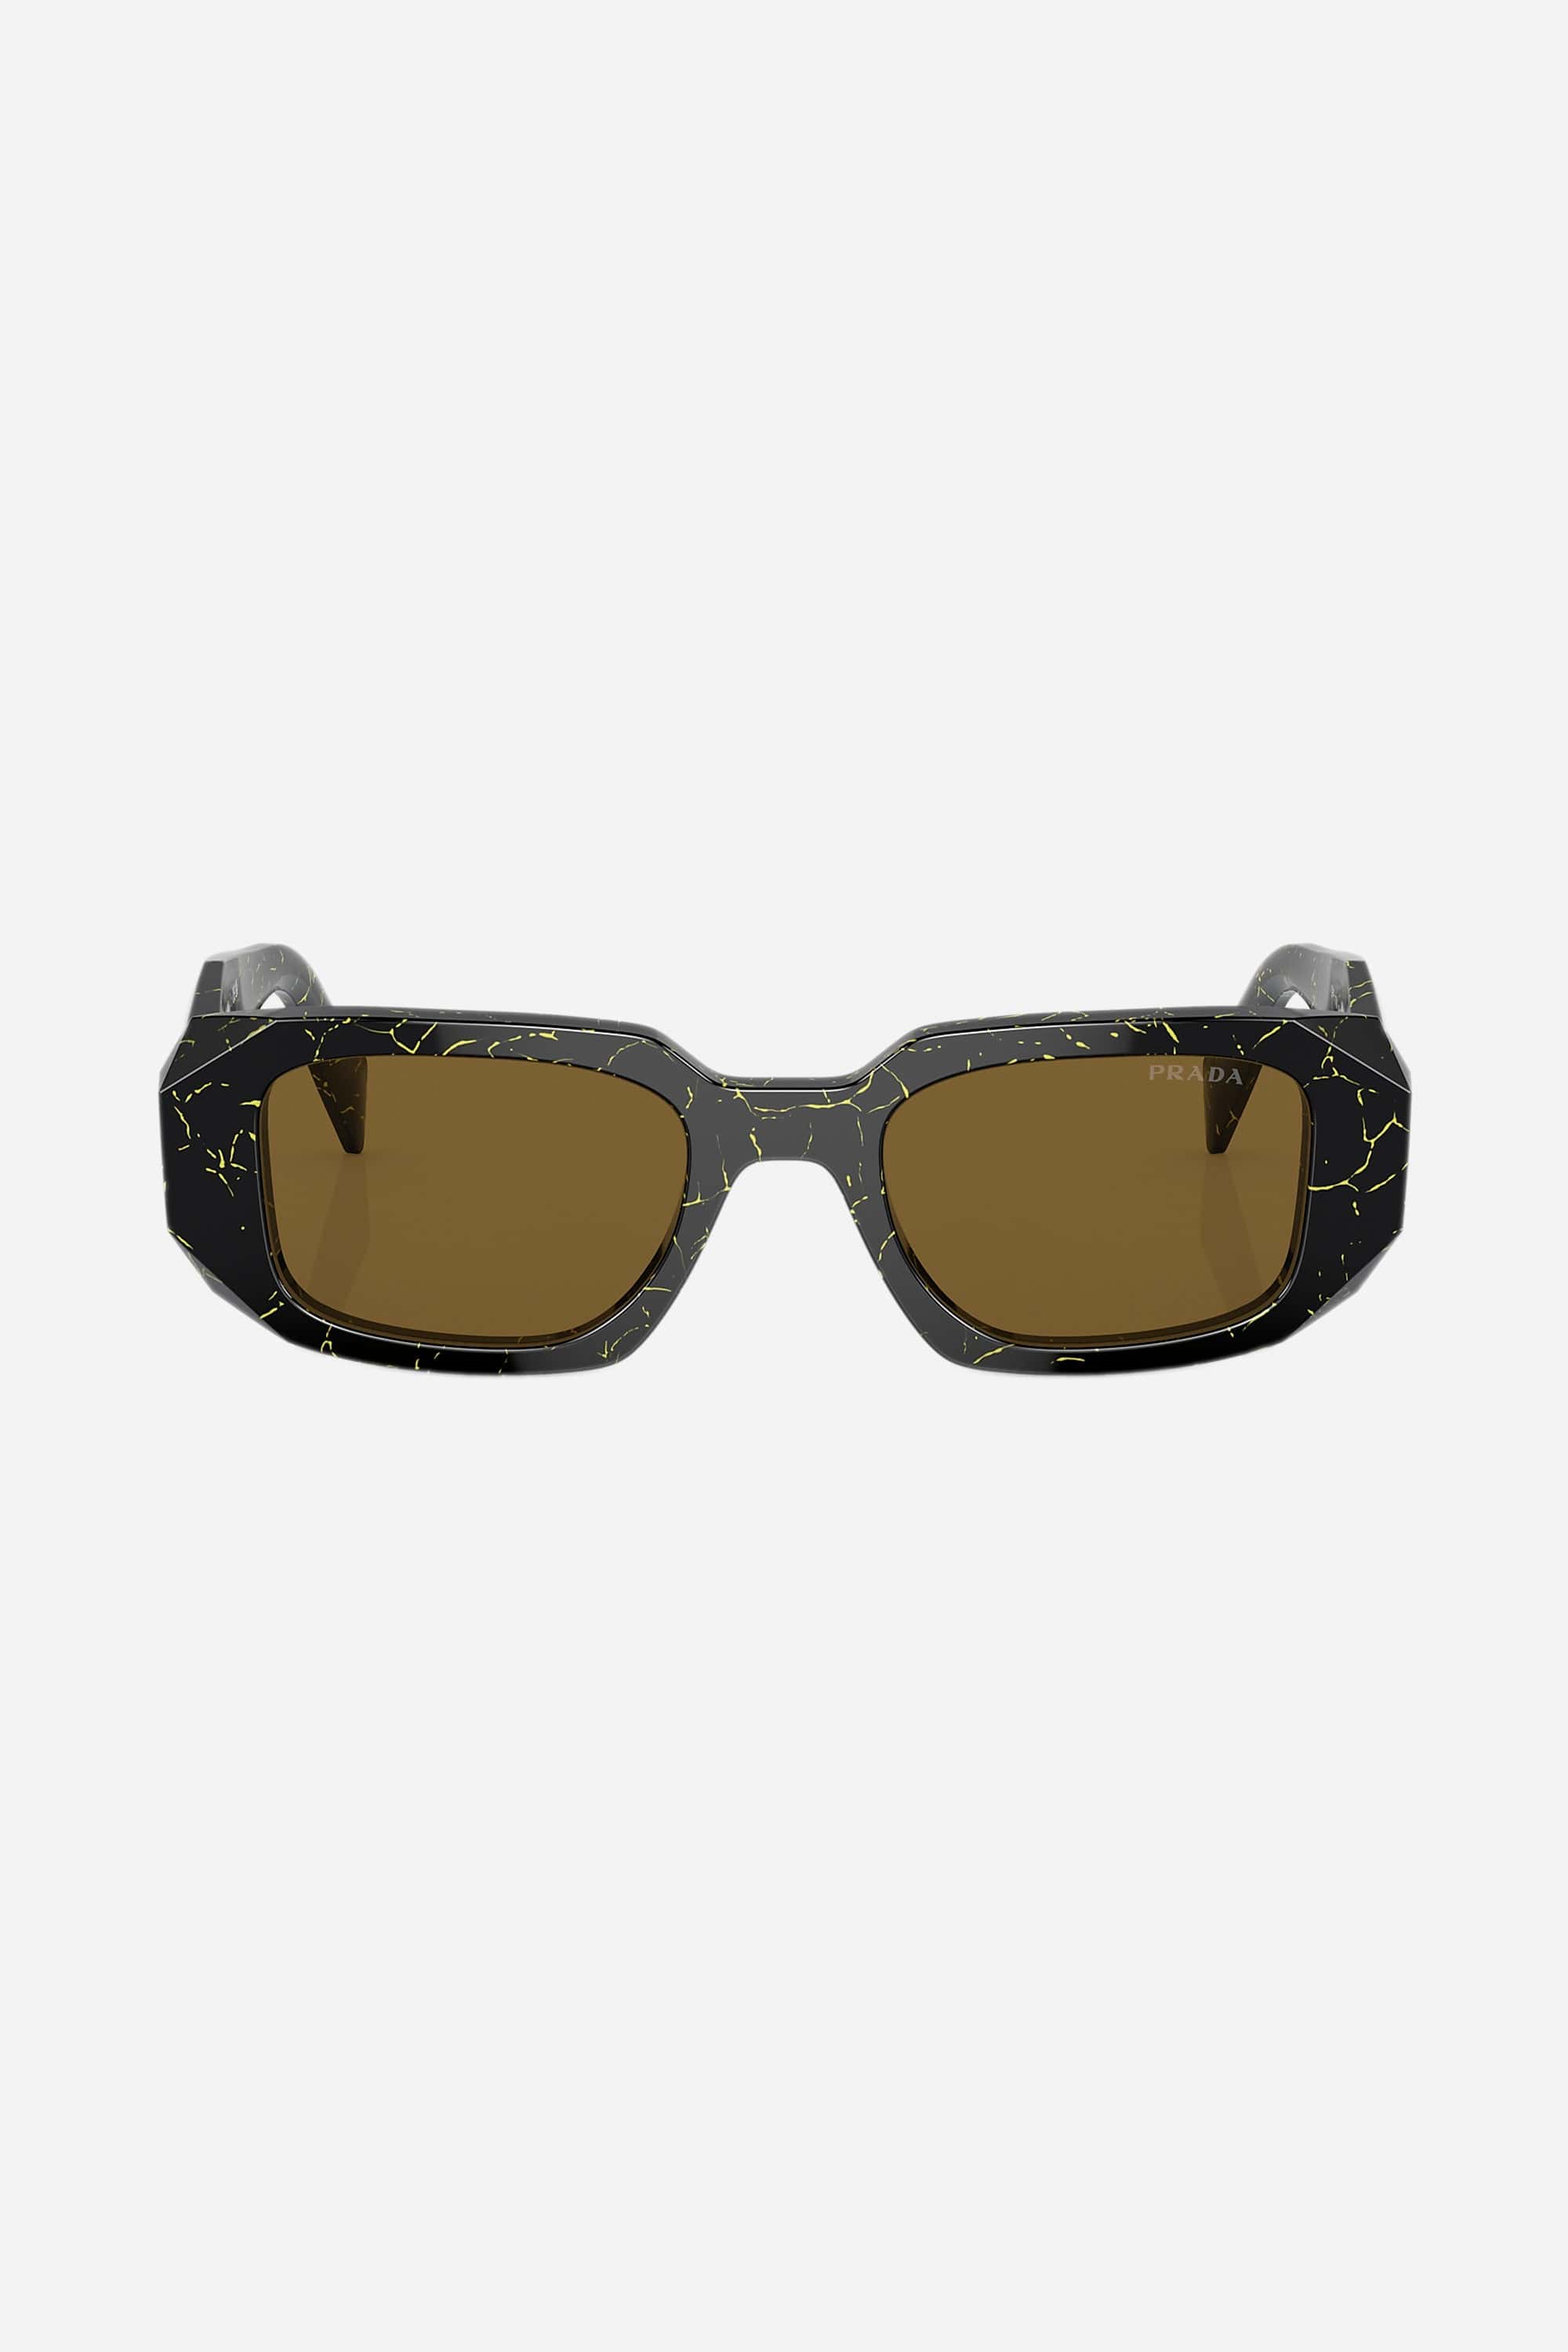 Prada symbol black and yellow marble oval sunglasses - Eyewear Club